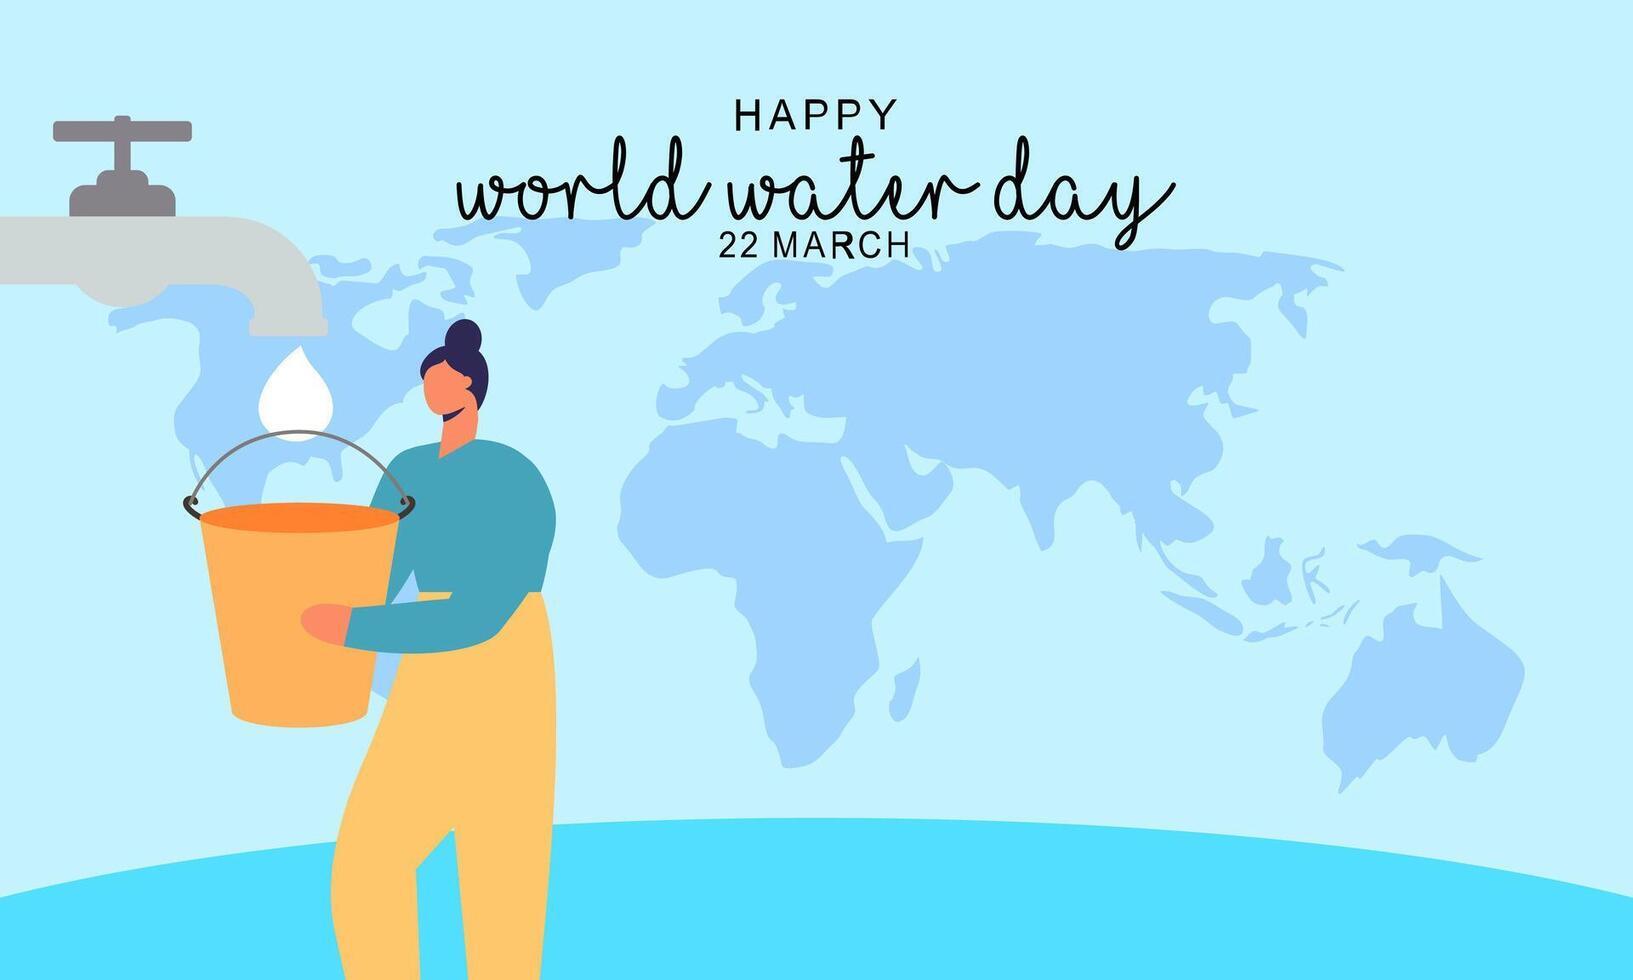 gelukkig Internationale water dag. vieren wereld water dag vector